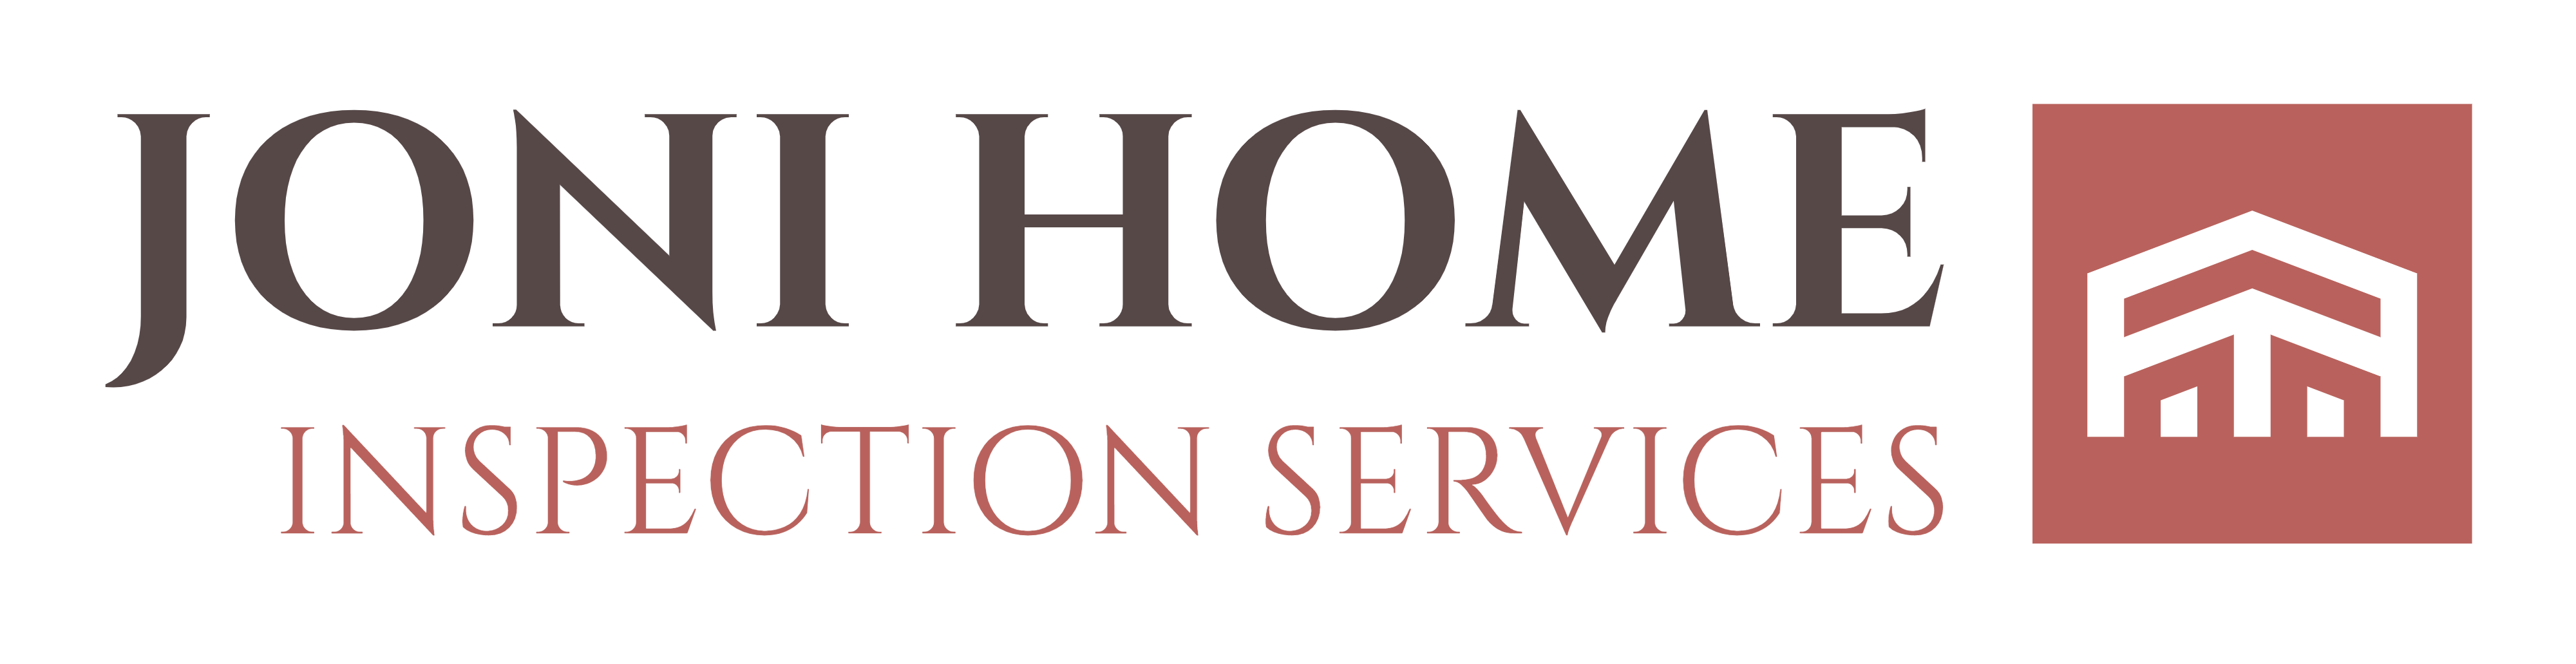 Joni Home Inspection Services, LLC Logo